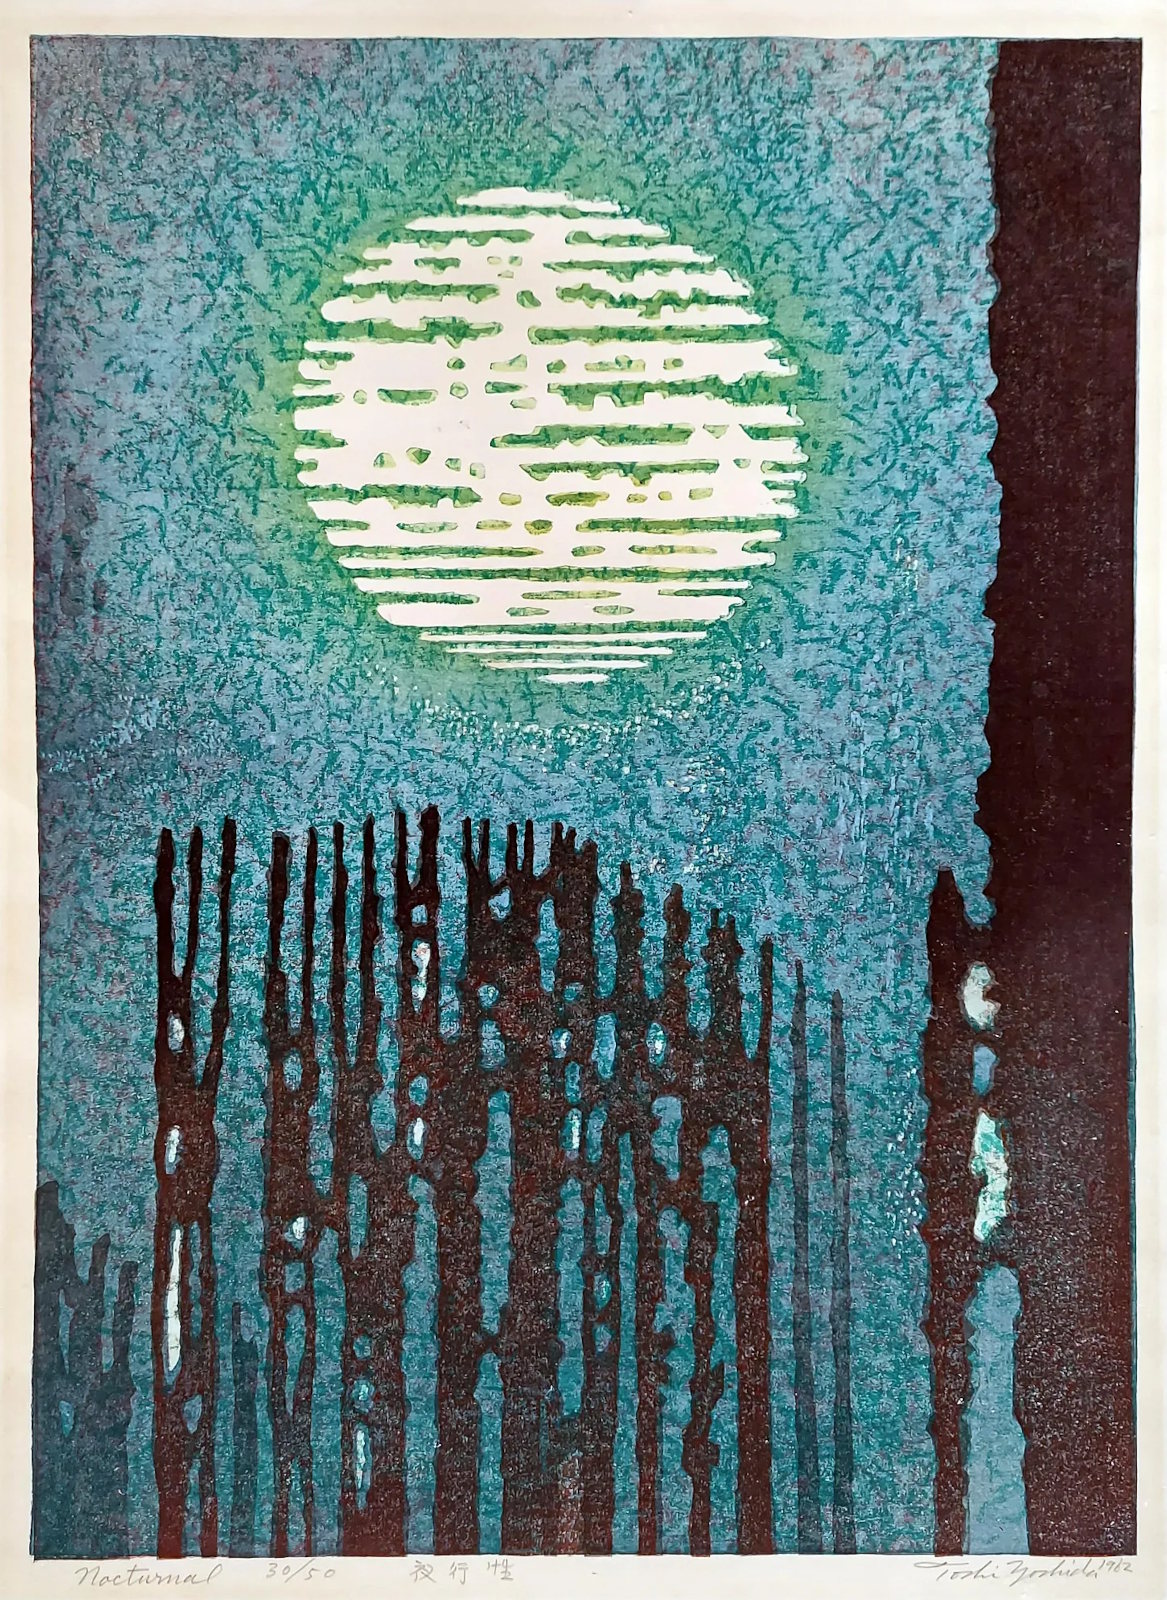 Toshi Yoshida “Nocturnal” 1962 woodblock print